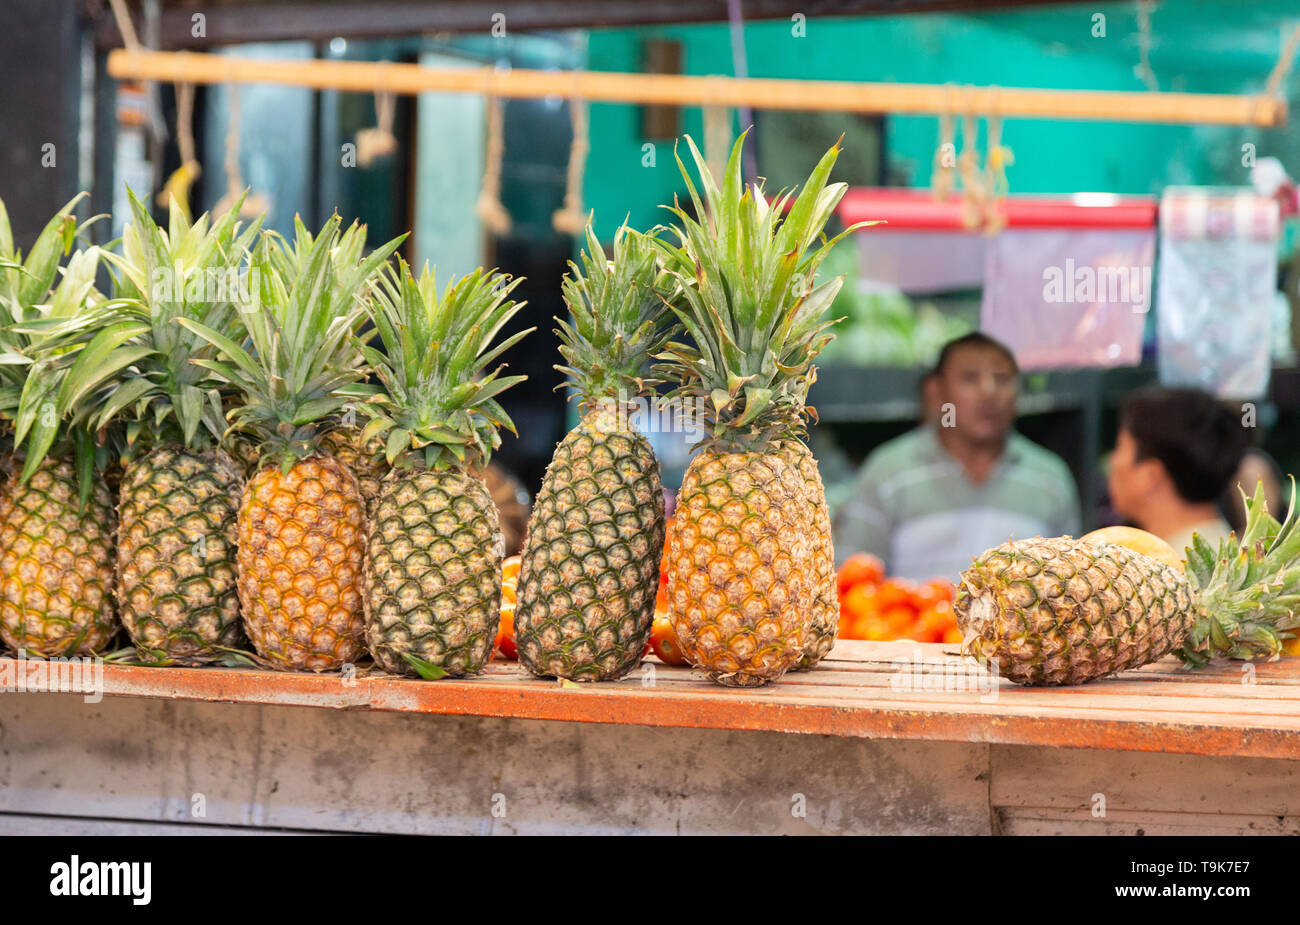 Latin american market - pineapples for sale at a food market, Merida, Yucatan Mexico Latin America Stock Photo